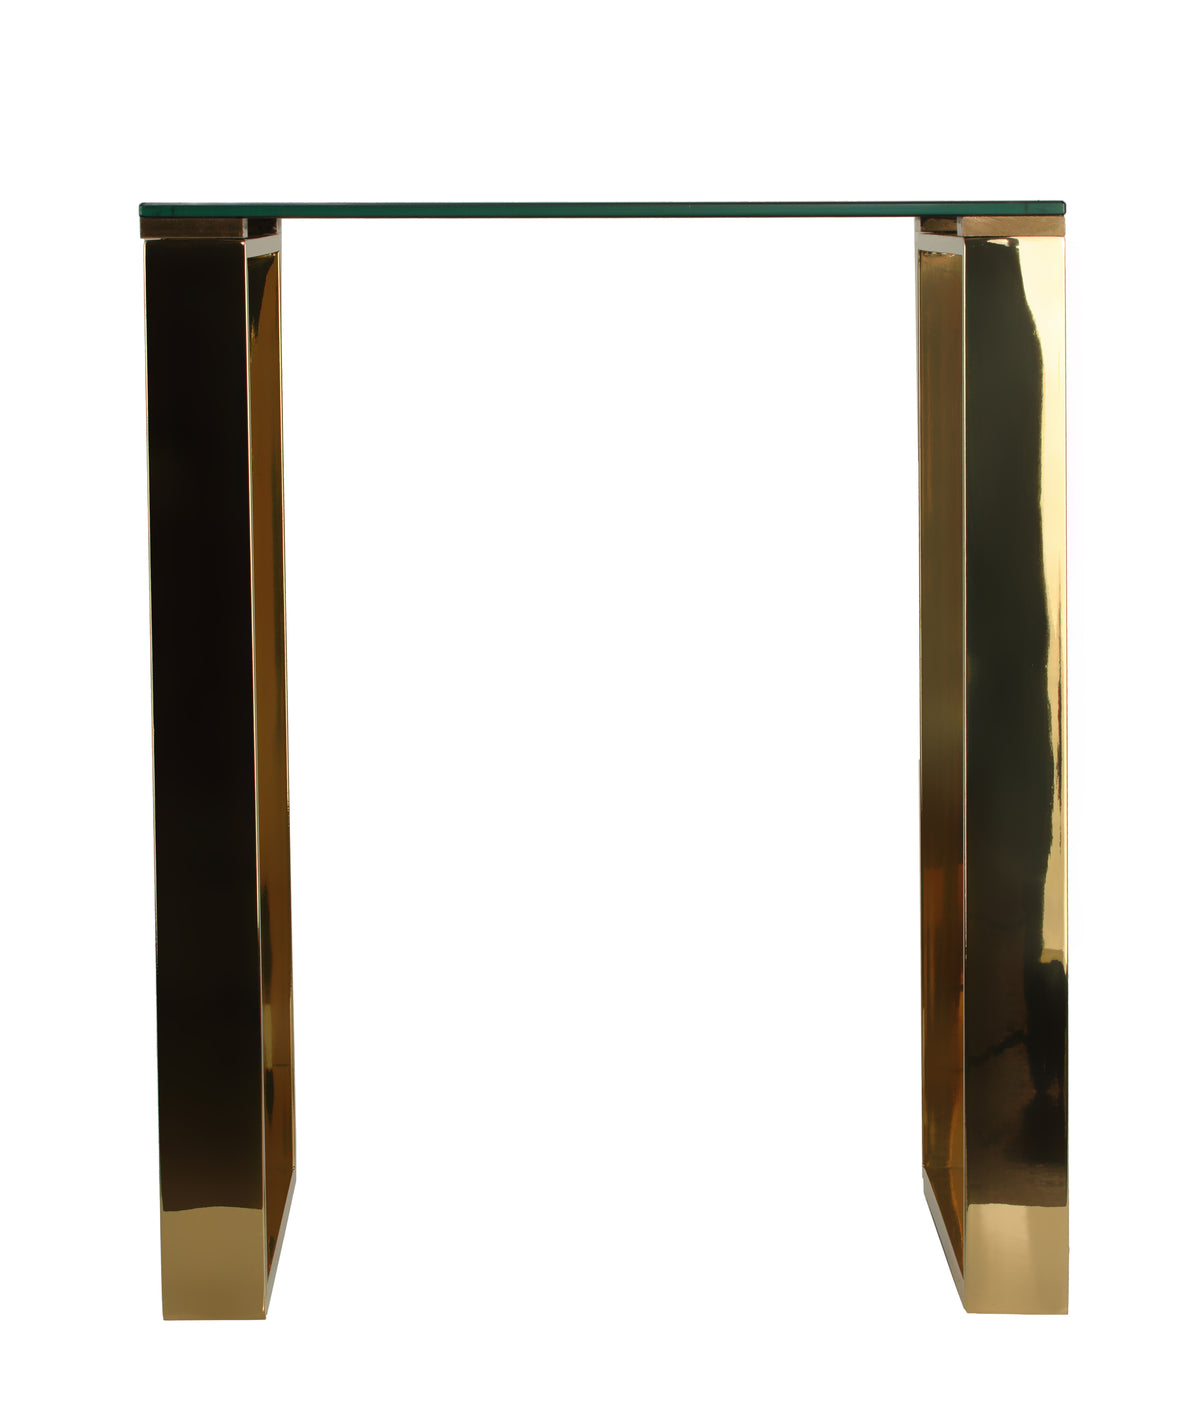 Cortesi Home Remini End Table, Gold Metal and Black Glass